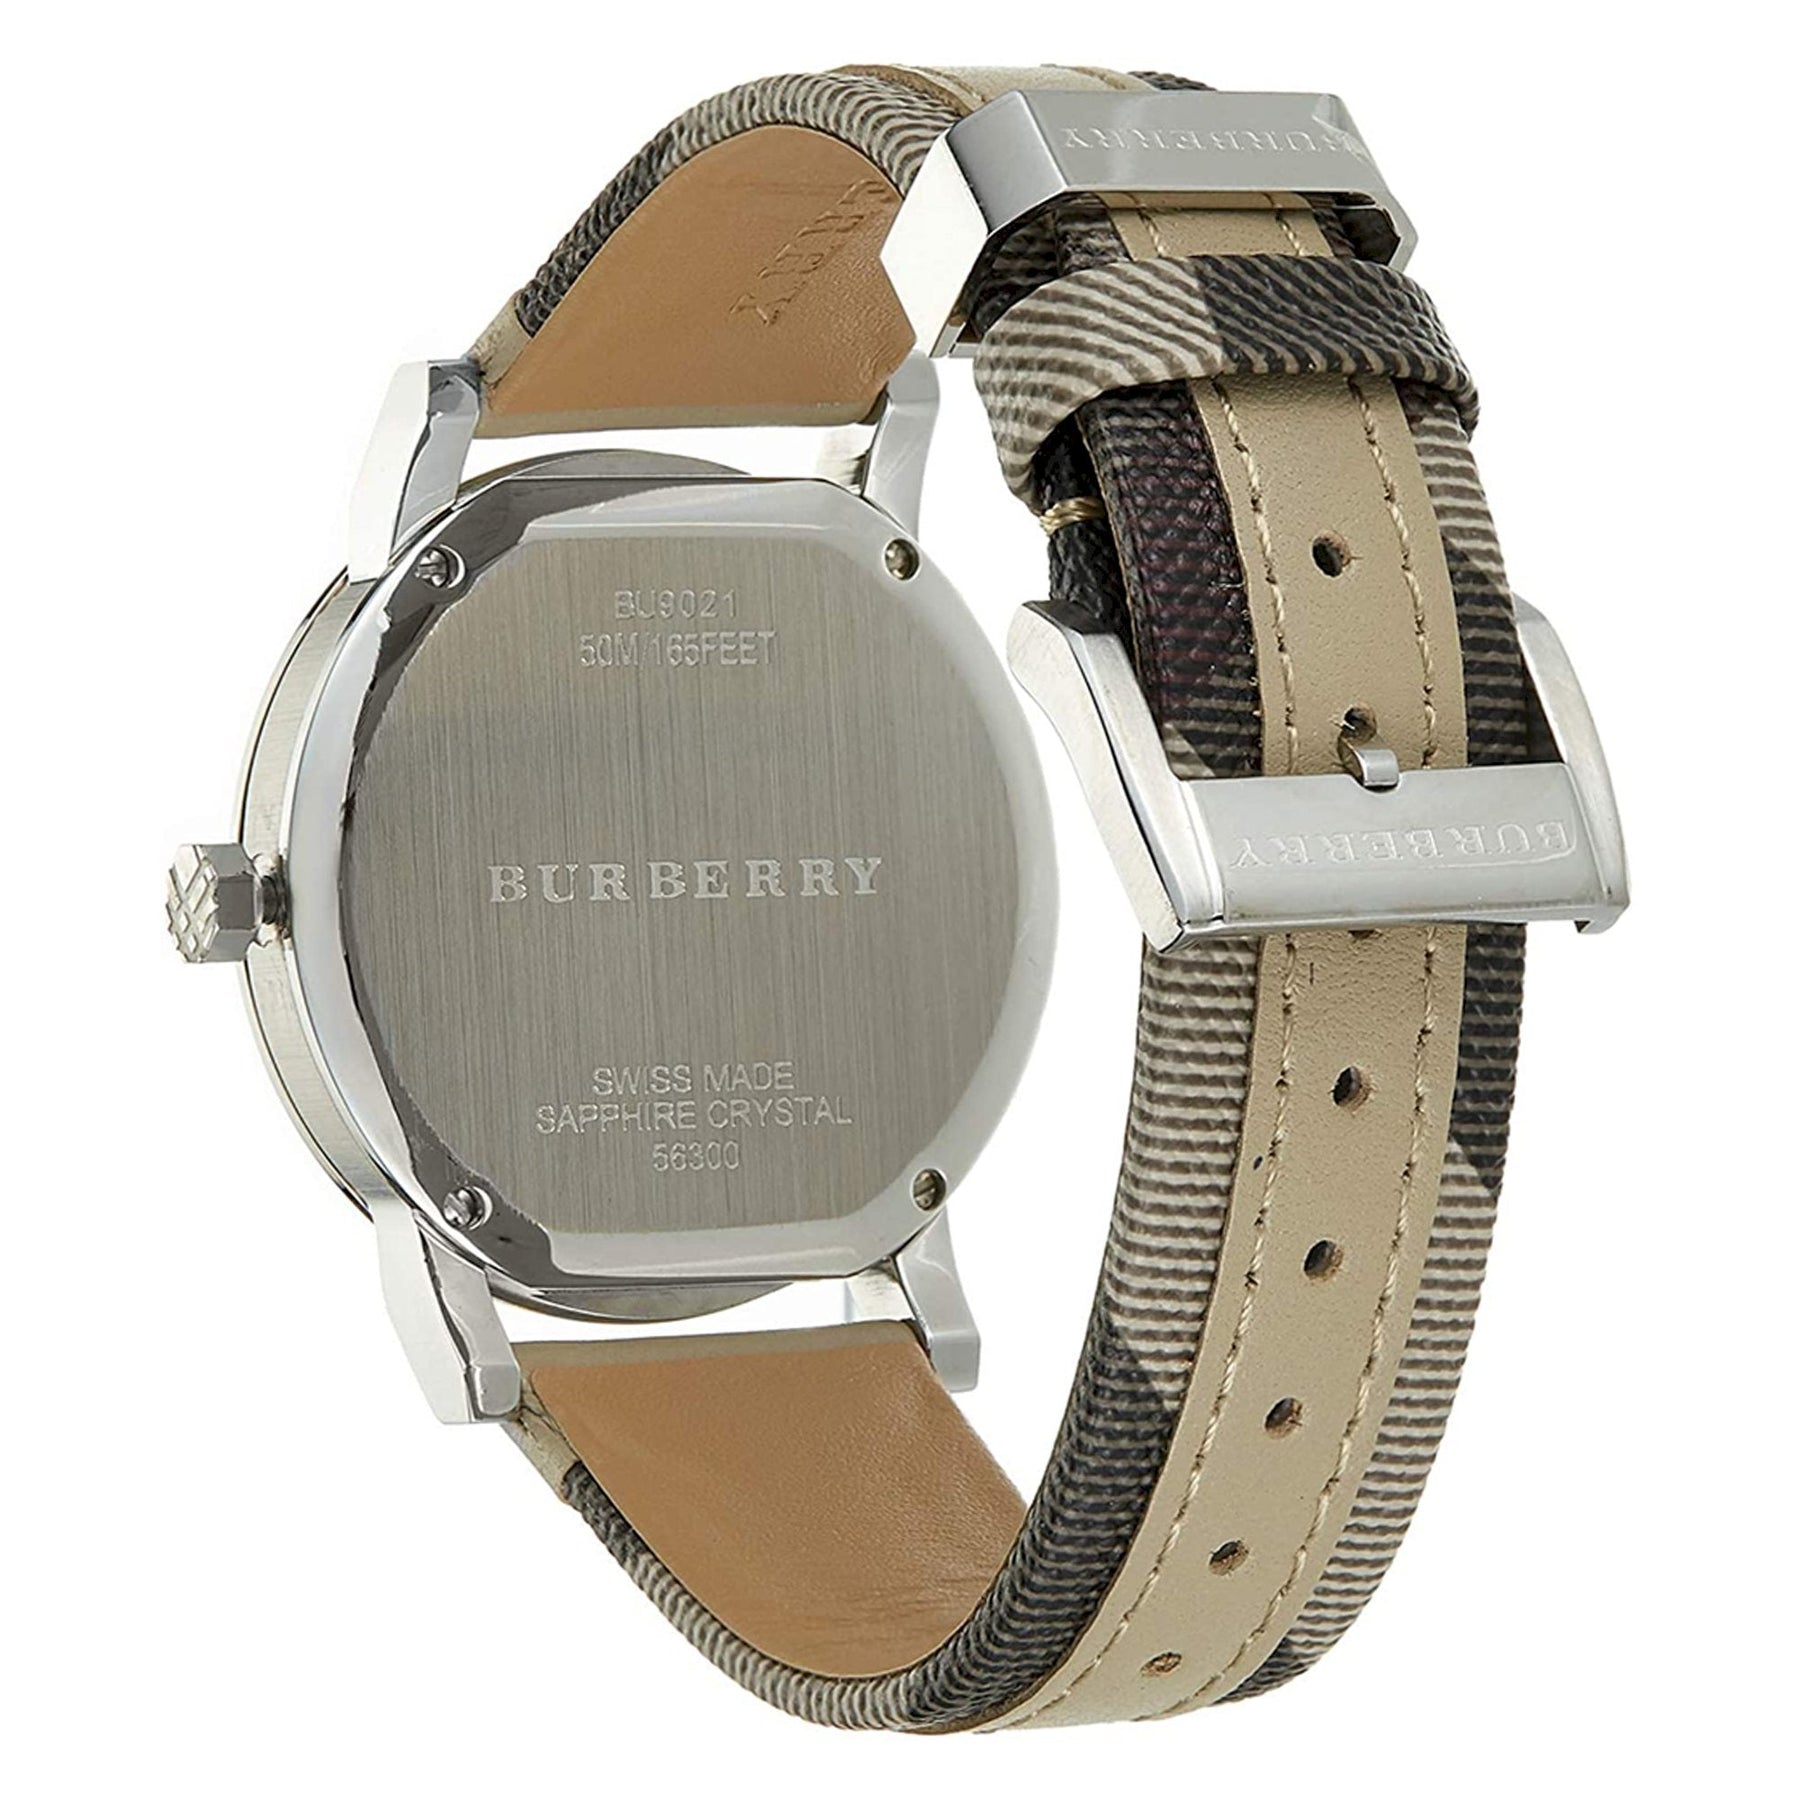 Burberry Ladies Nova Watch BU9021